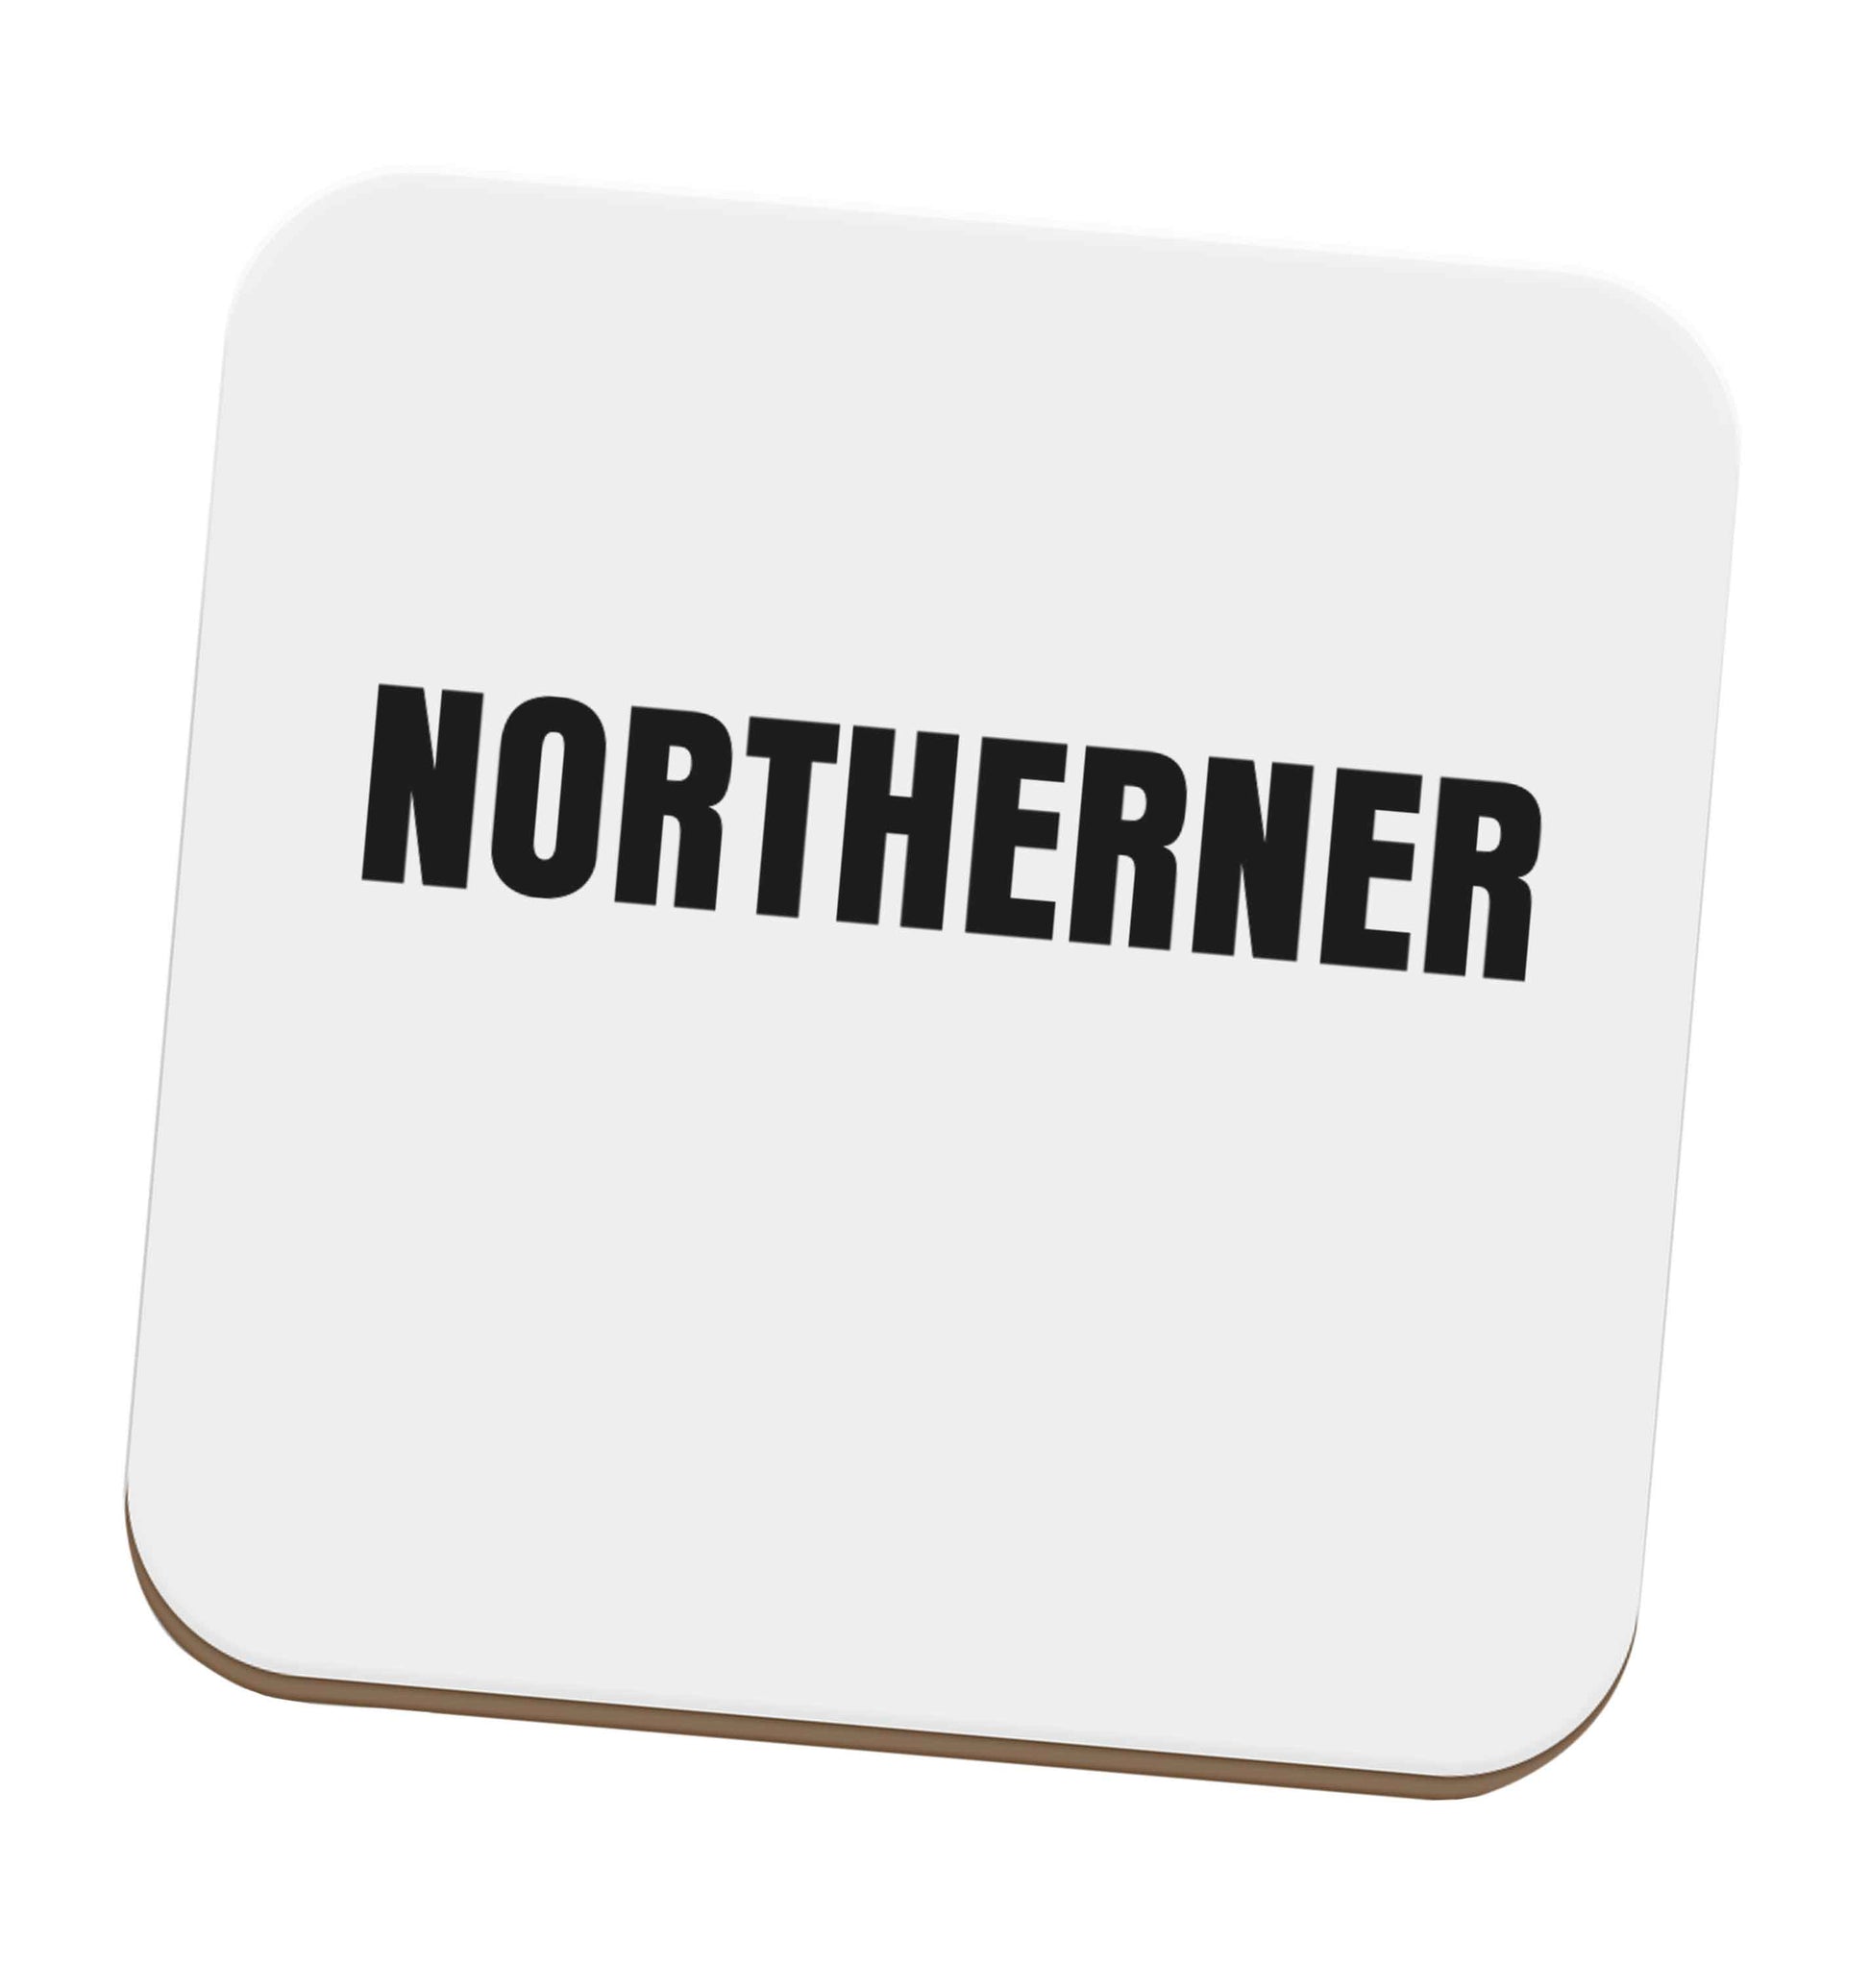 Northerner set of four coasters